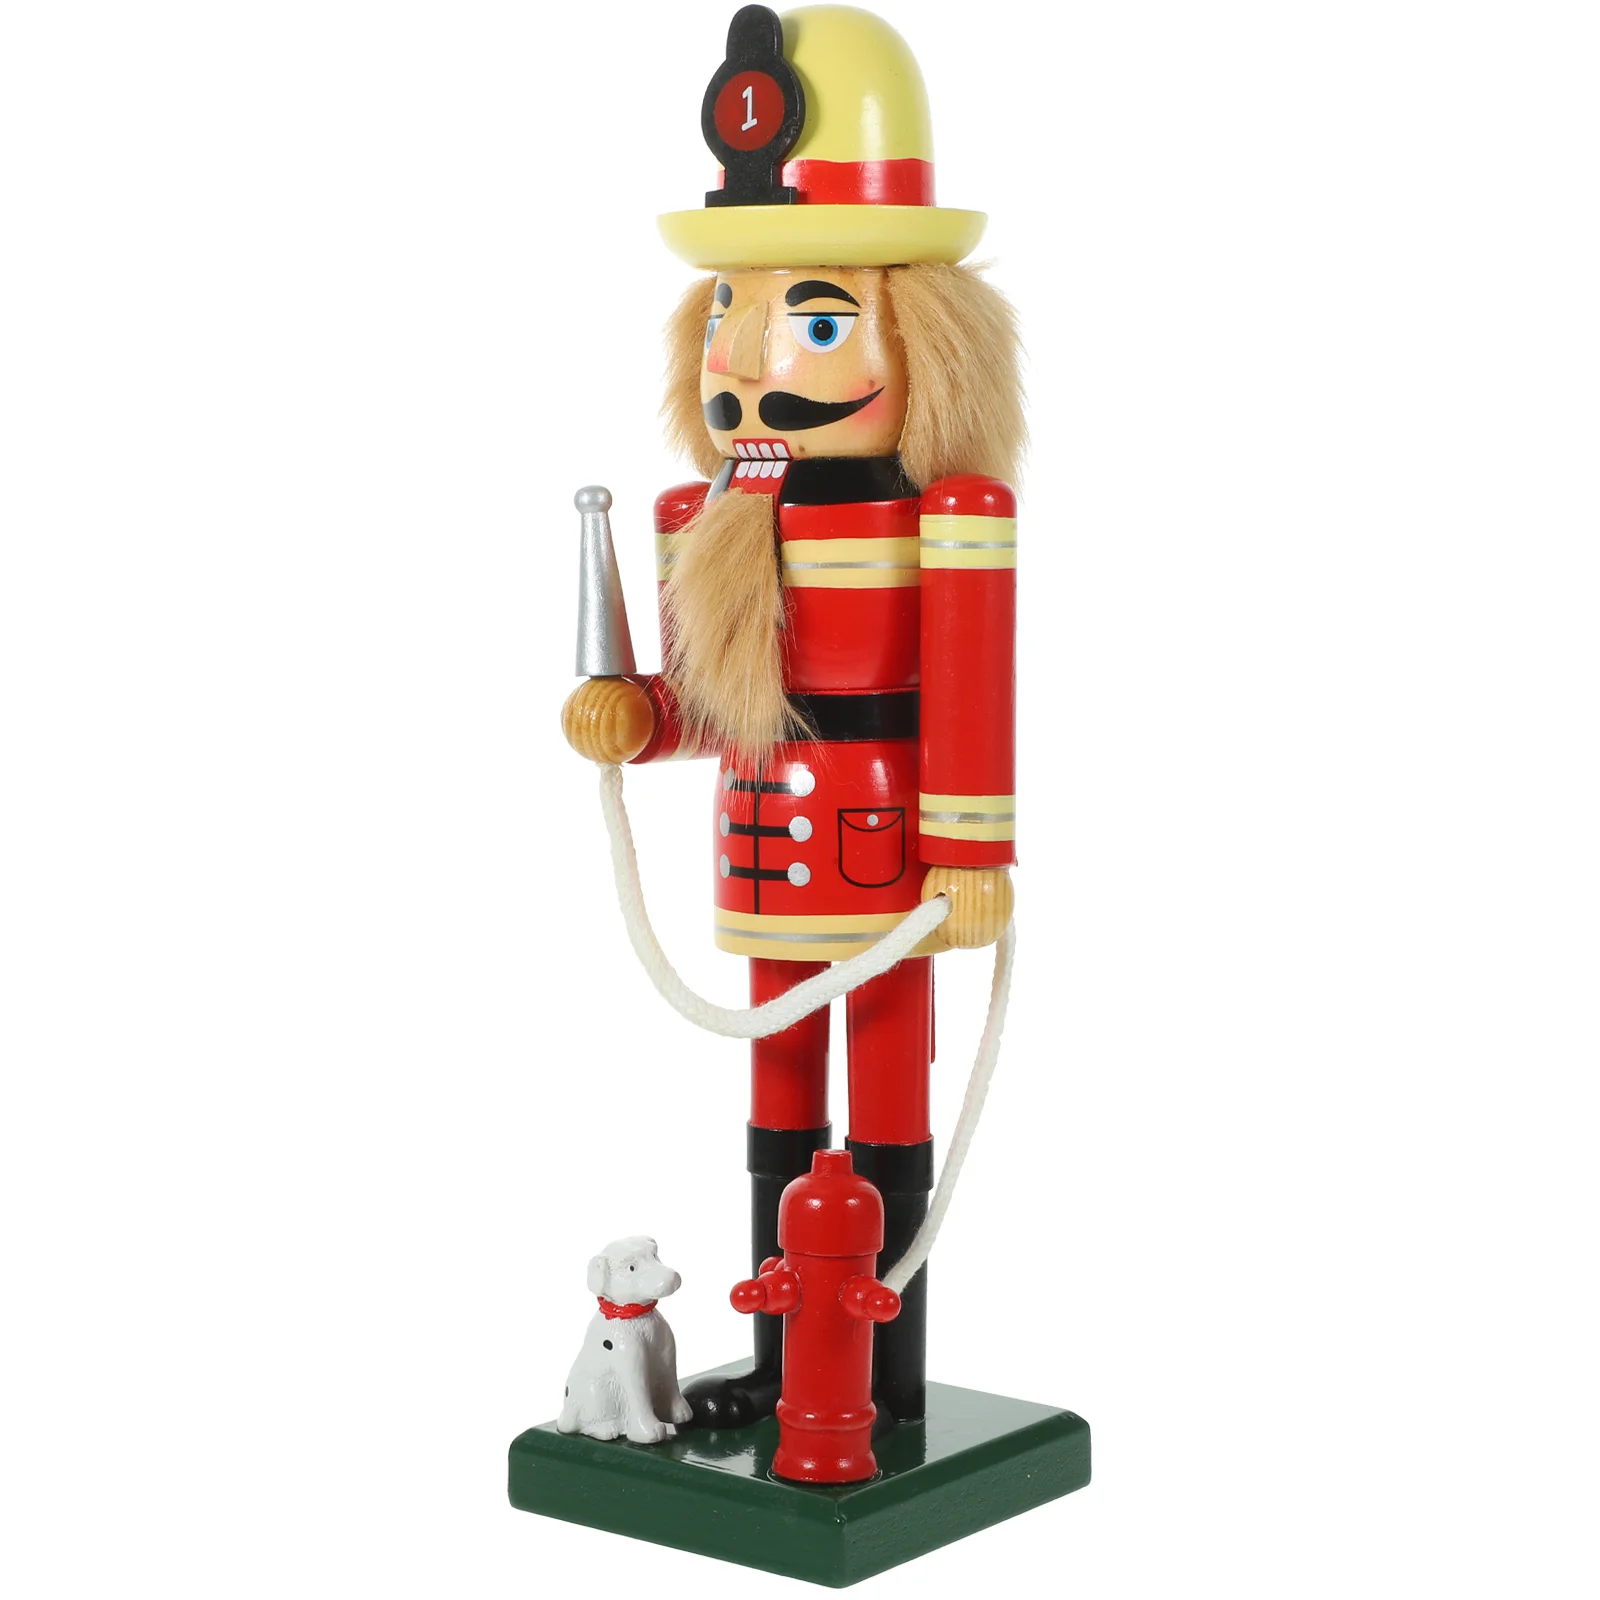 

36cm Desktop Wooden Nutcracker Figurine Fireman Nutcracker Statue Decor Christmas Party Christmas Gift Home Decor